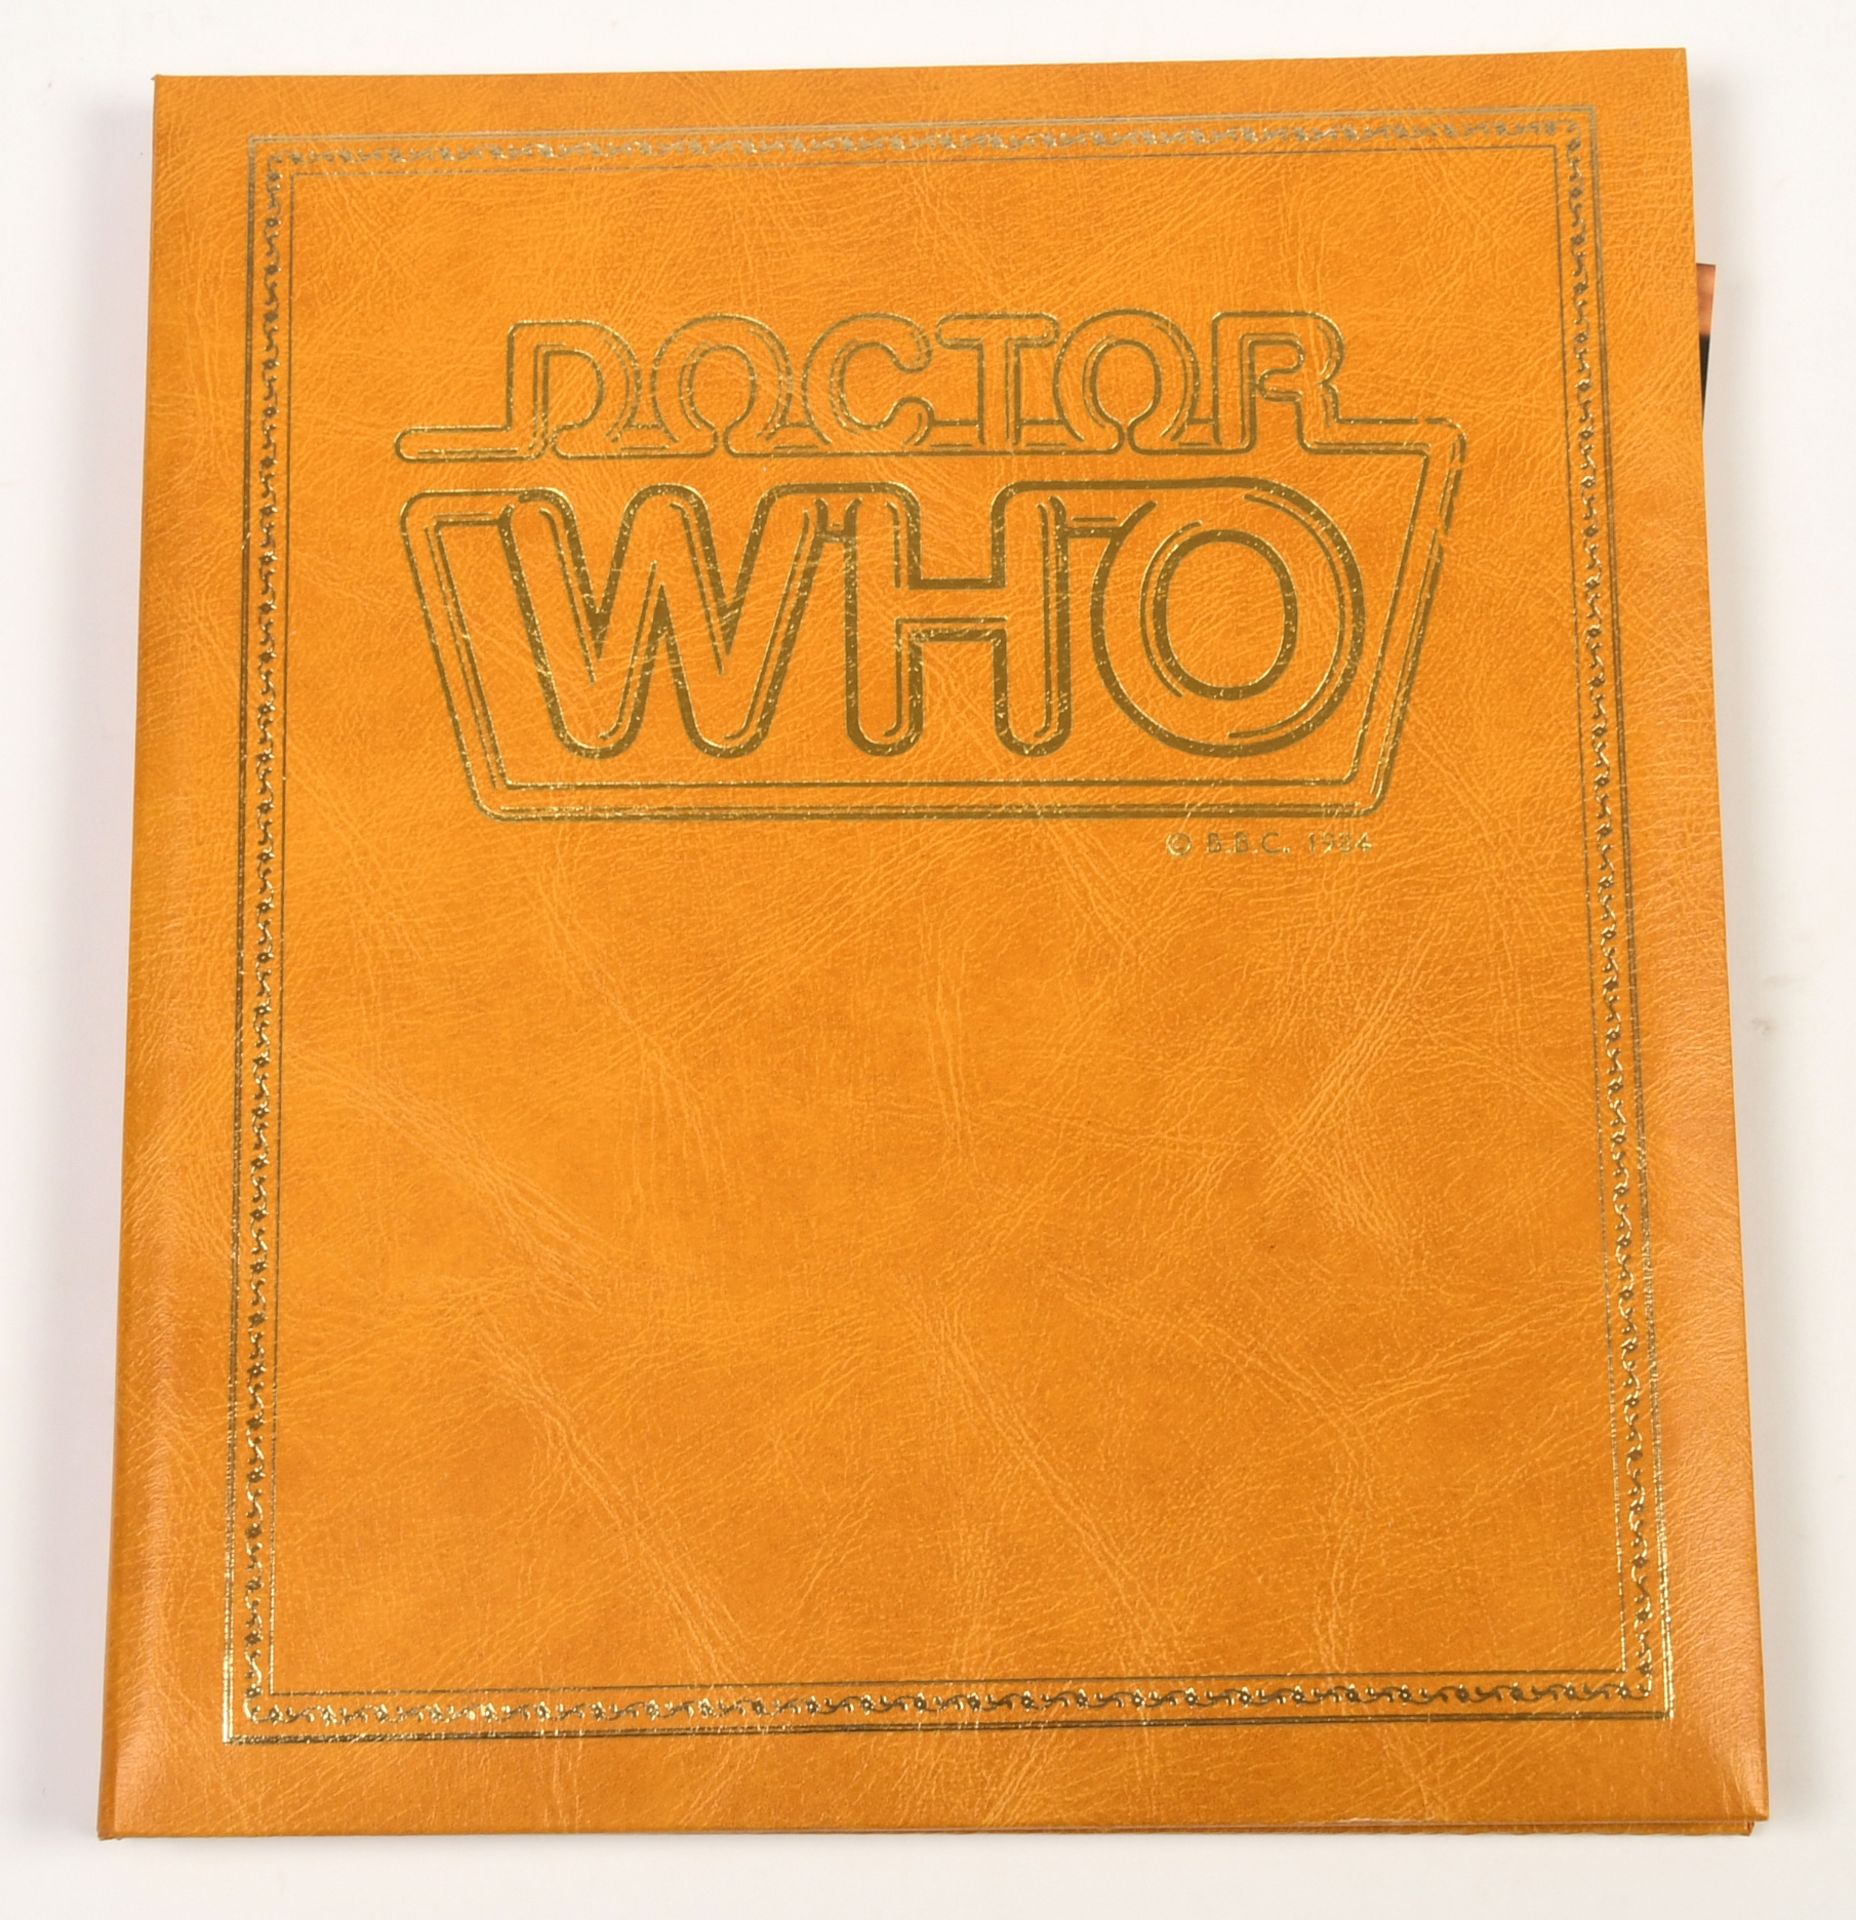 Doctor Who photo album containing signed photos